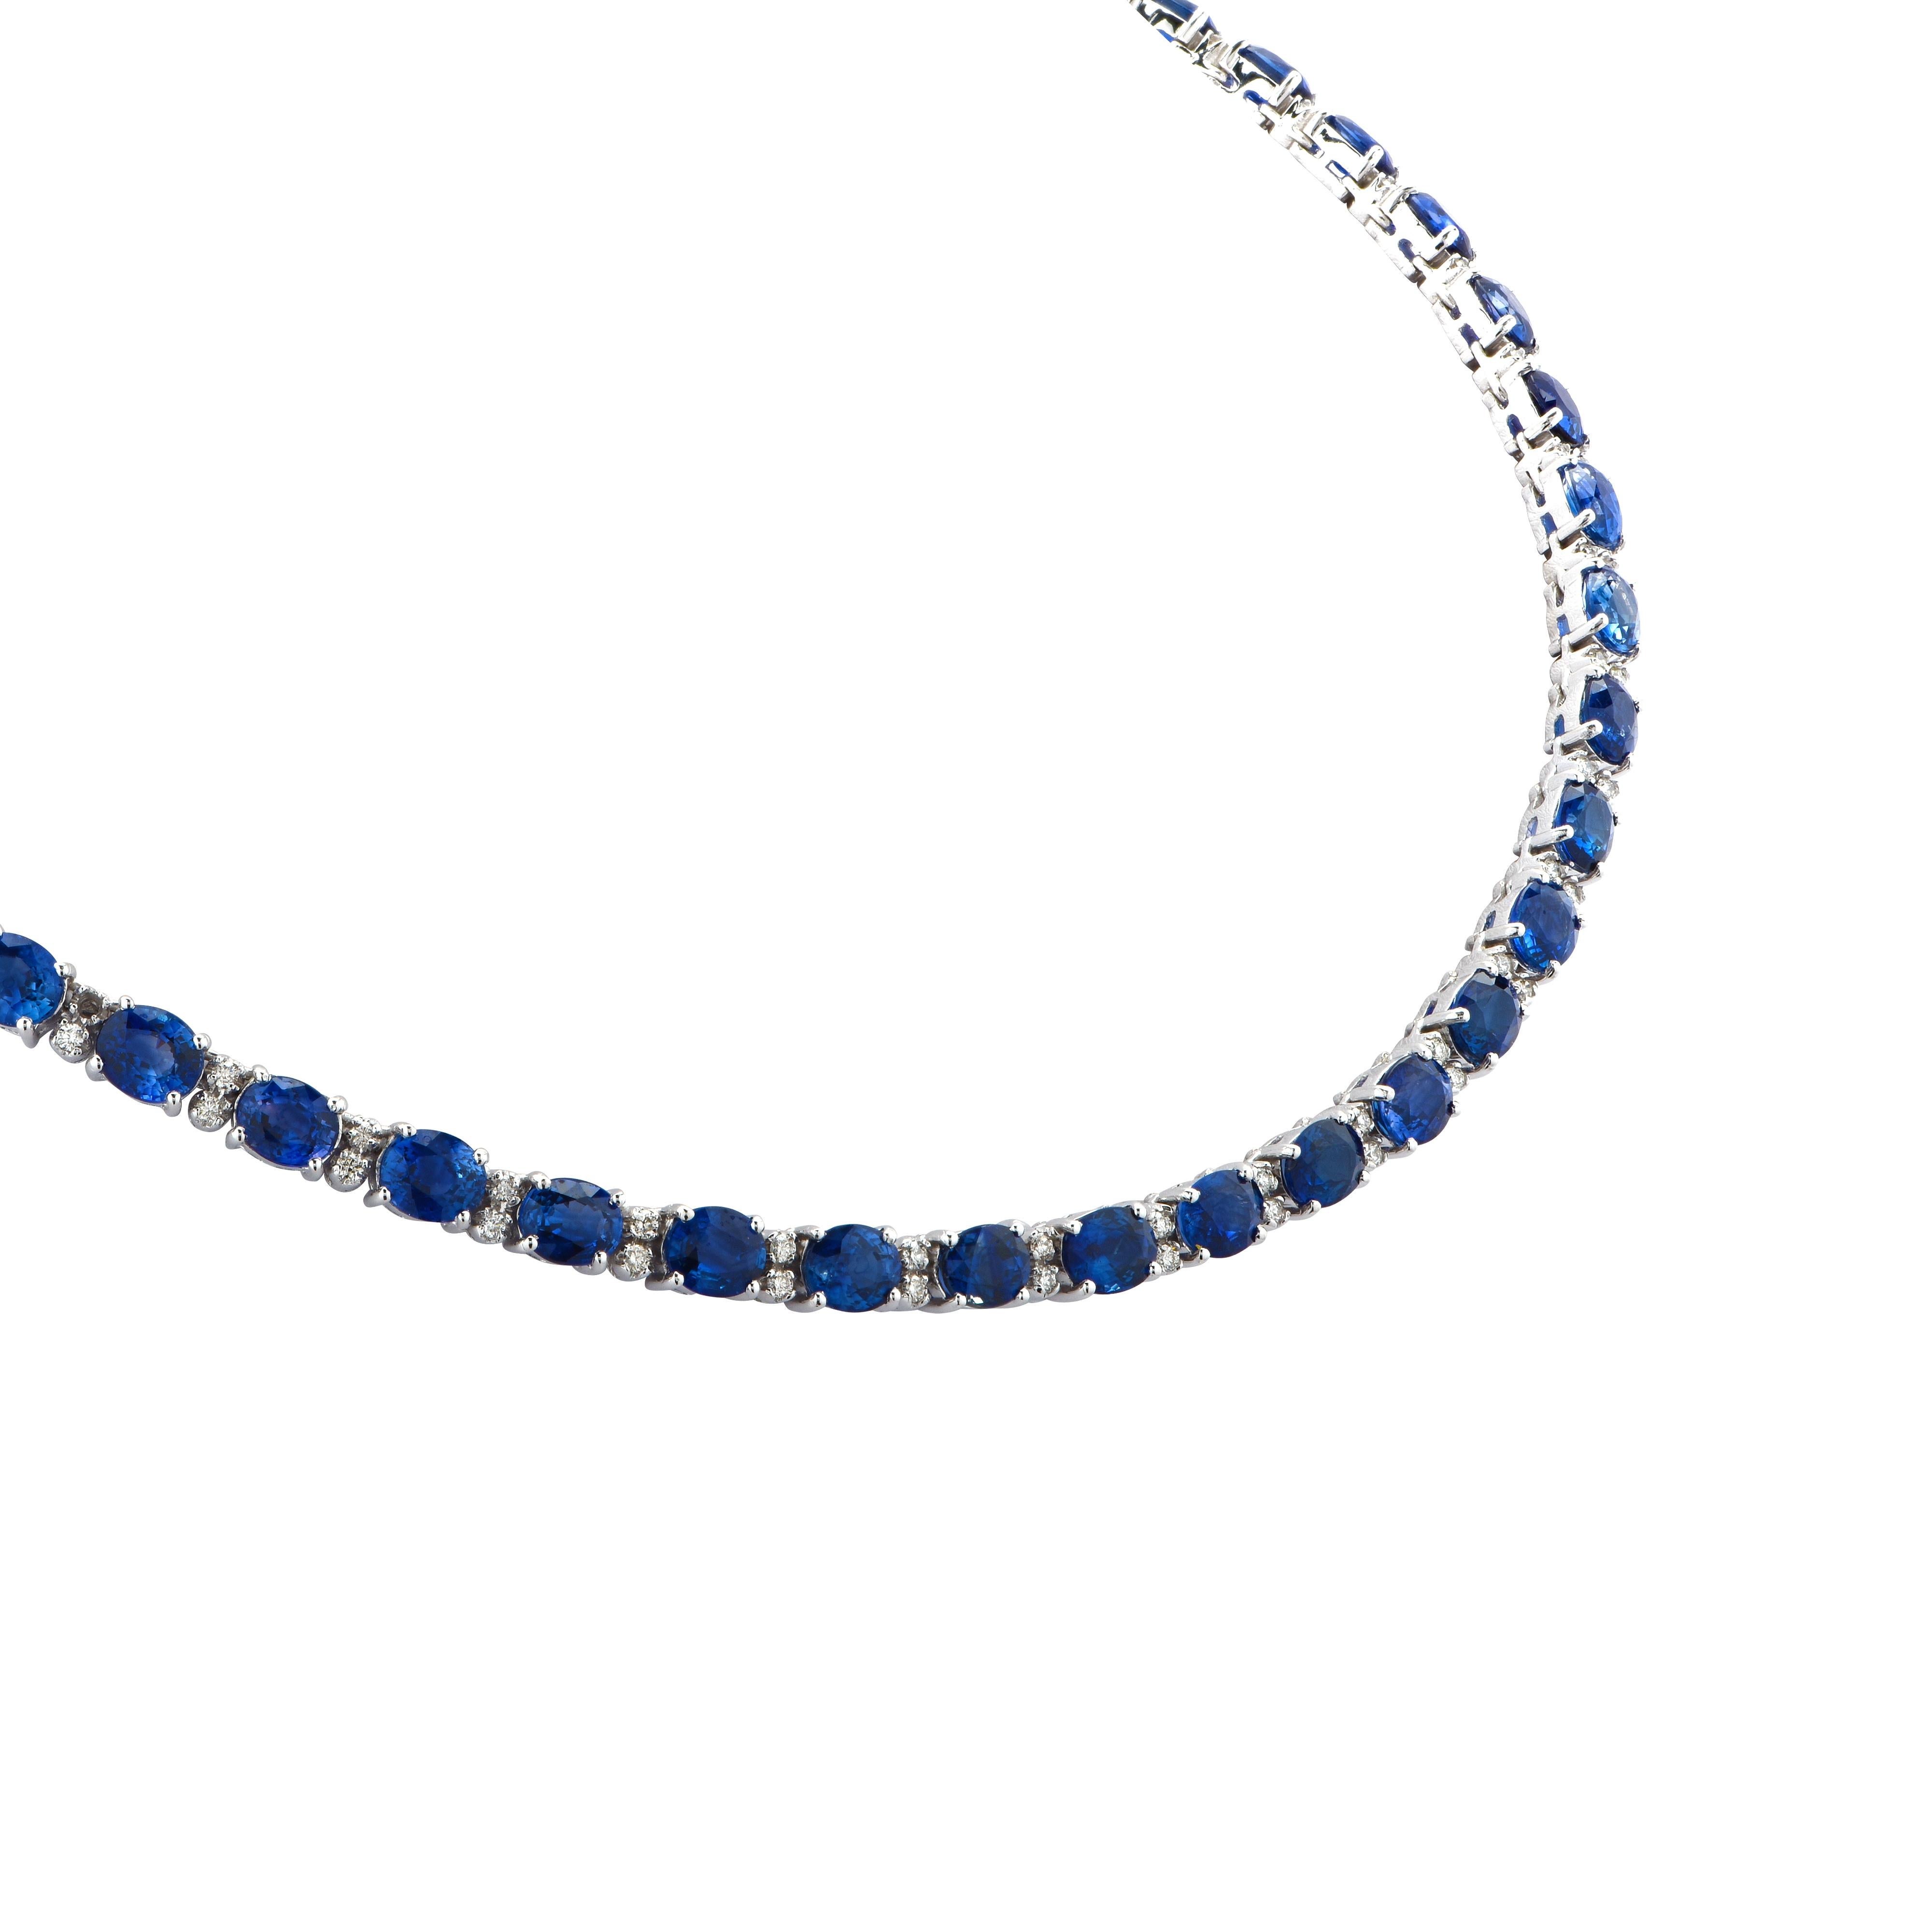 Oval Cut 40 Carat Sapphire and Diamond Necklace